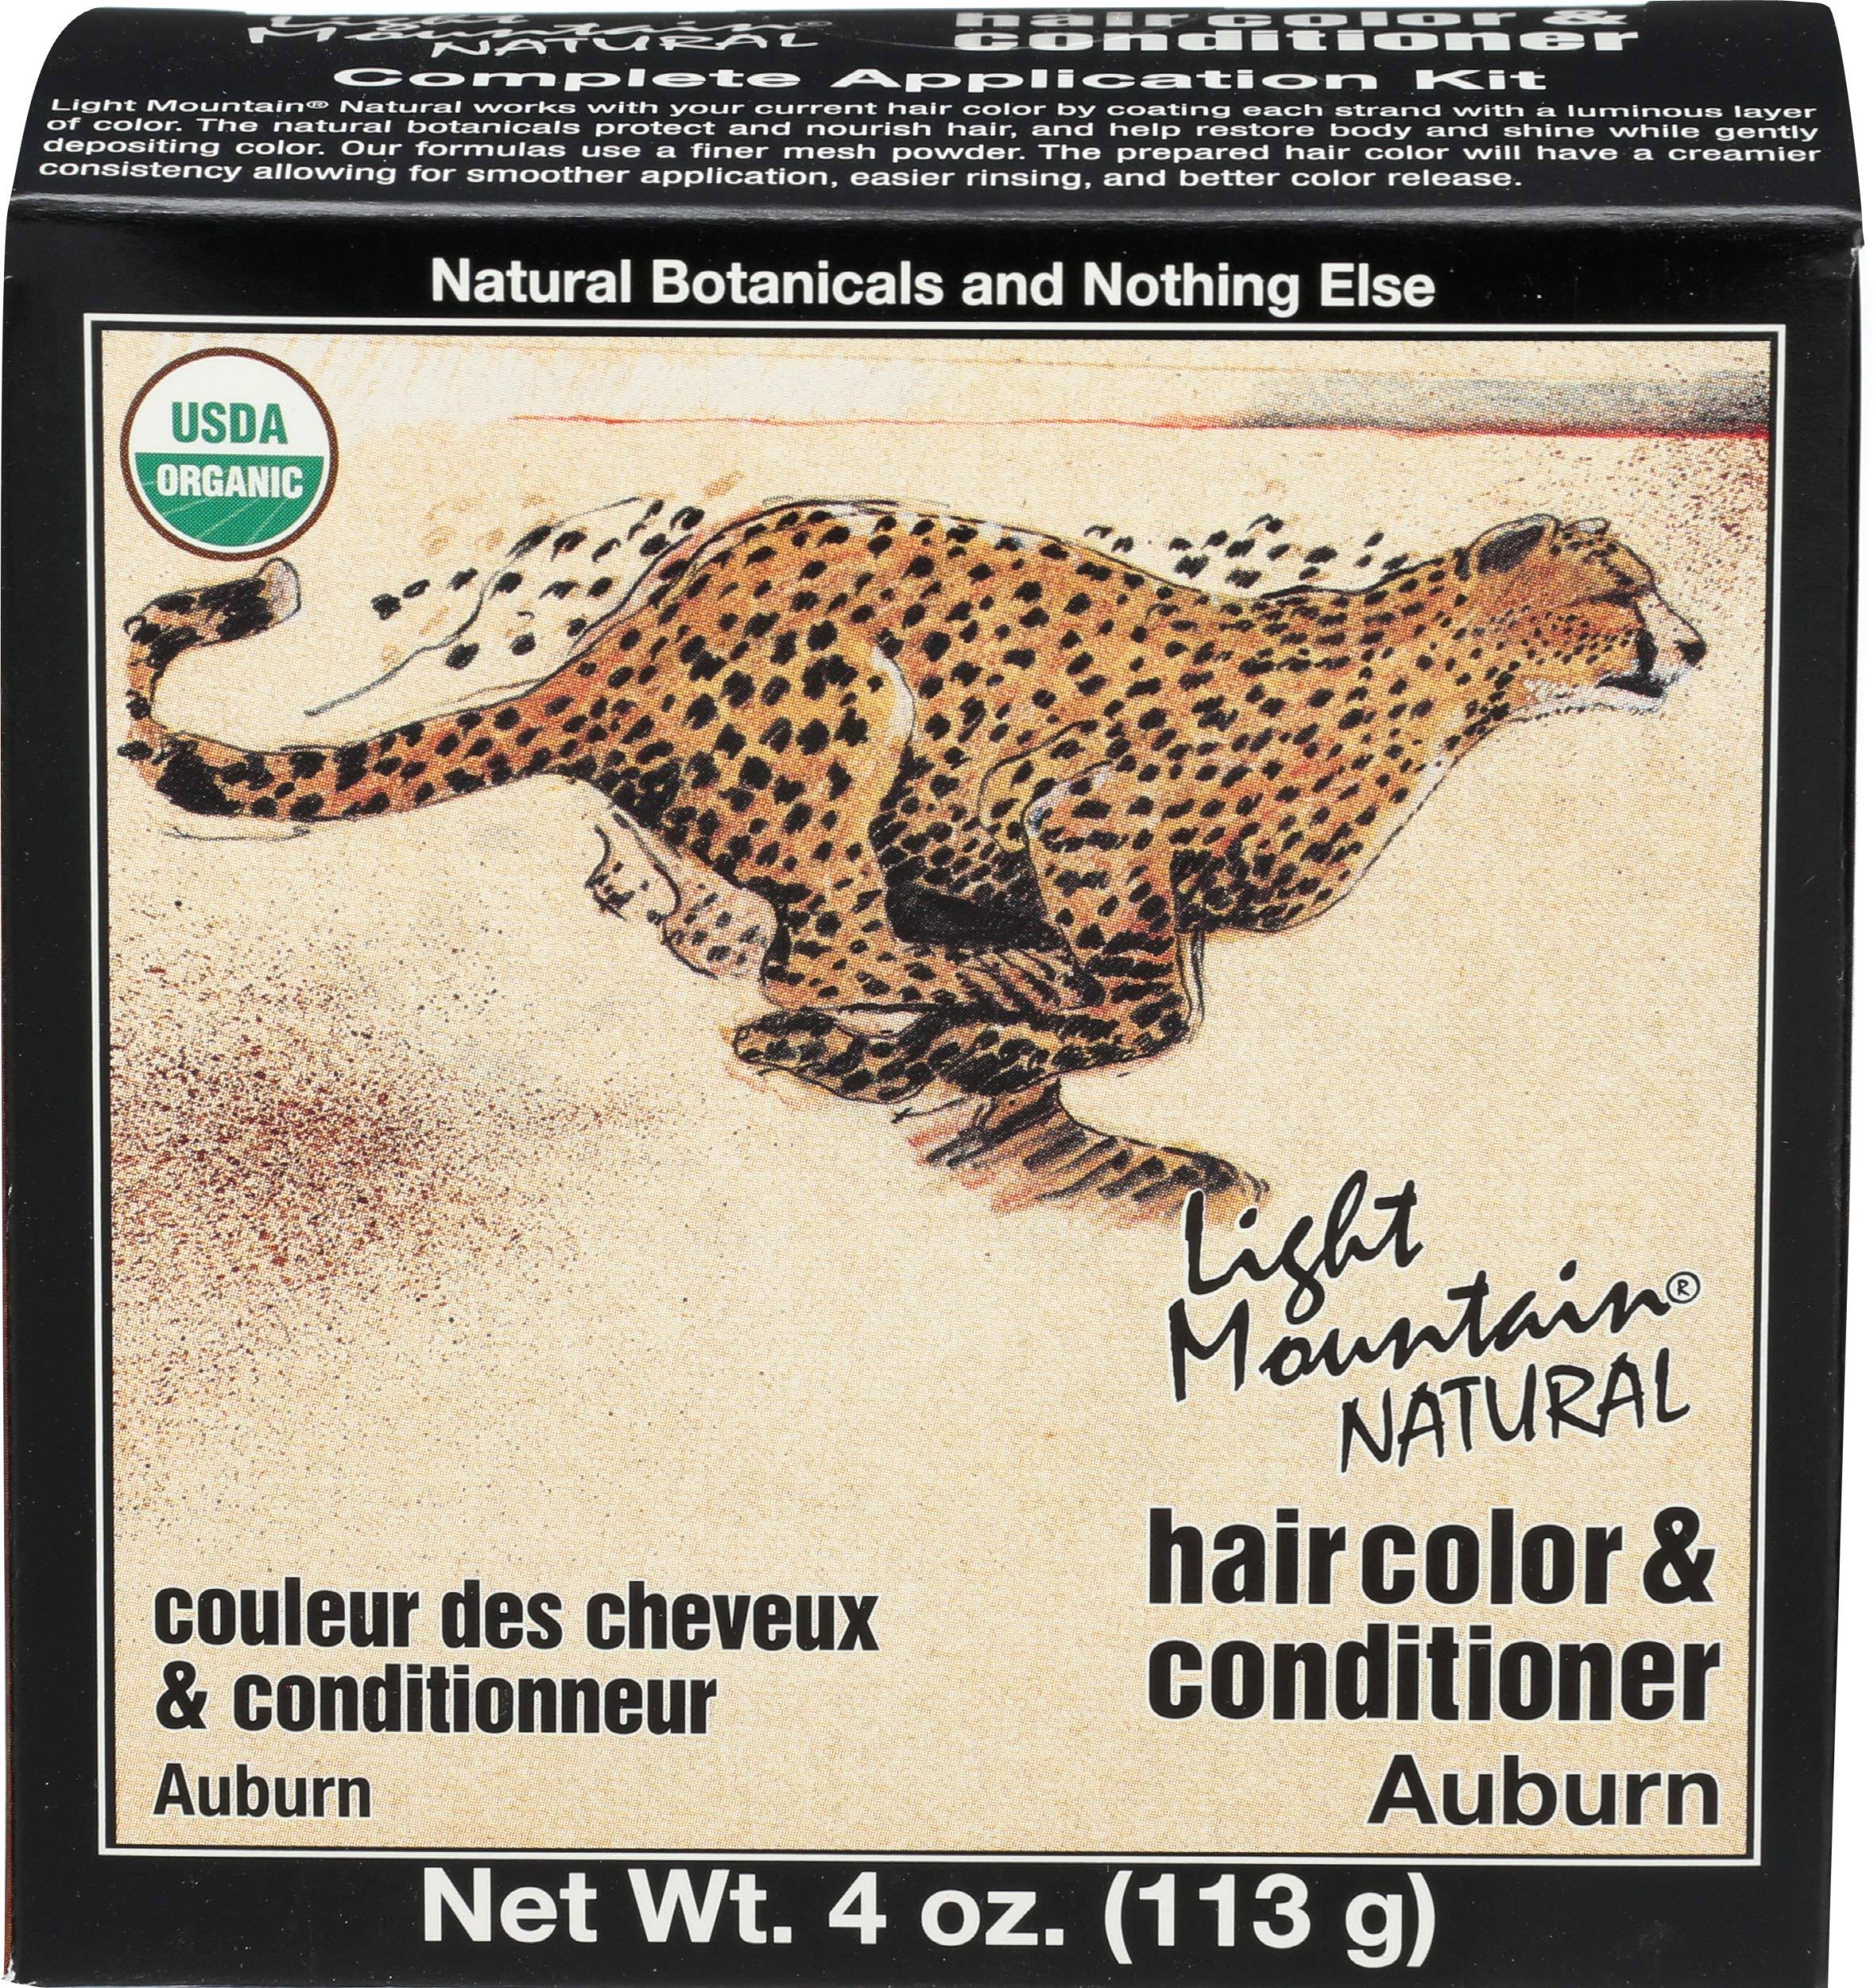 Light Mountain Natural Hair Color & Conditioner - Auburn, 4 oz